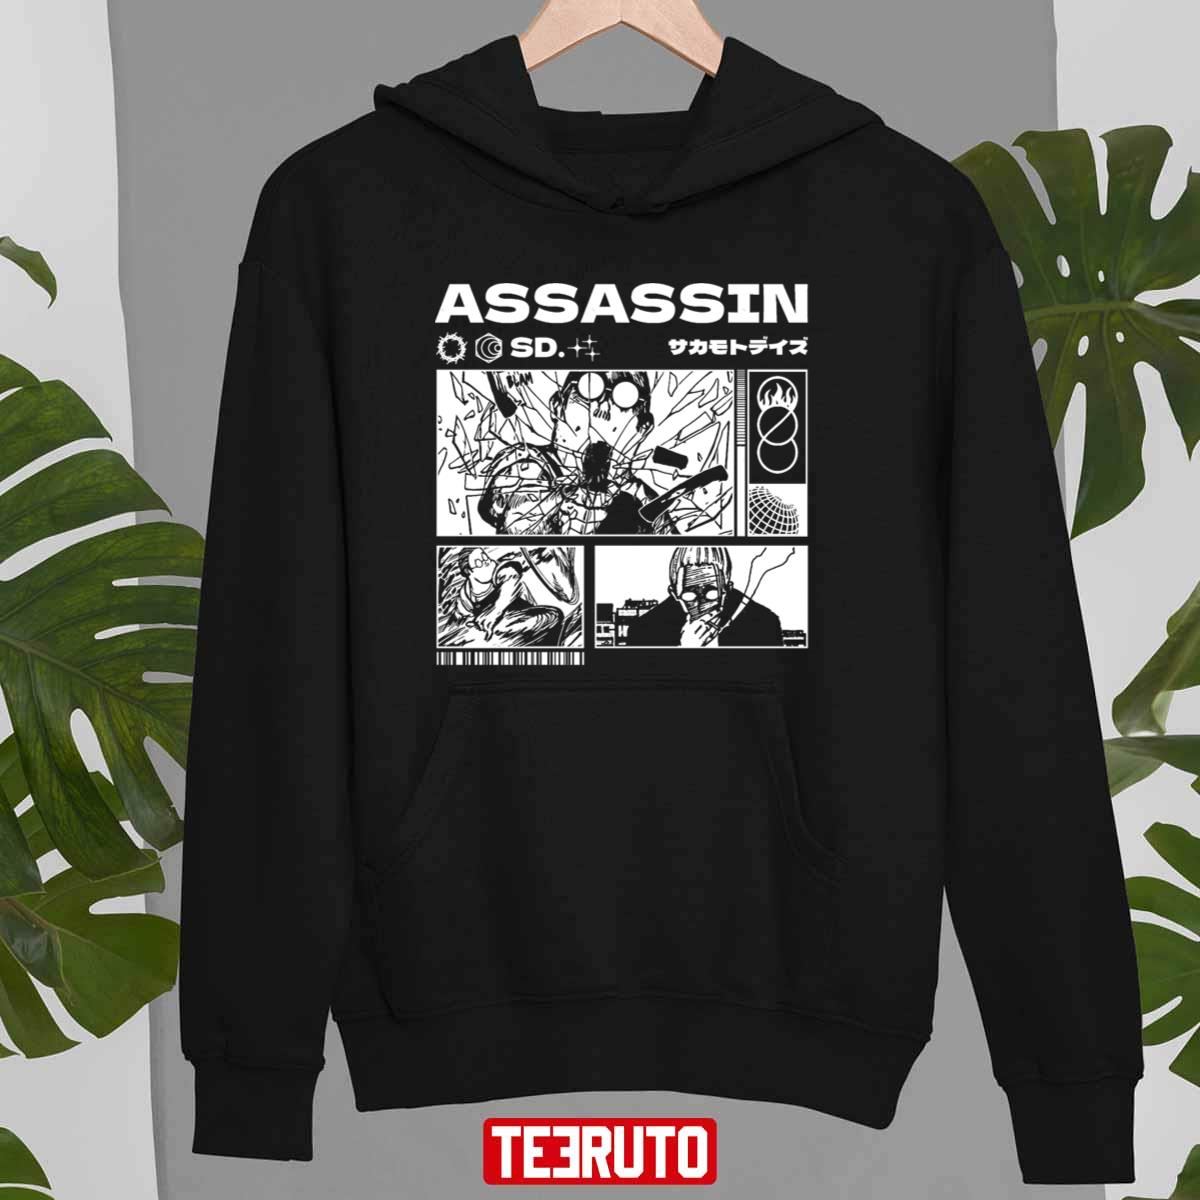 Assassin Sakamoto Days Art Unisex T-Shirt